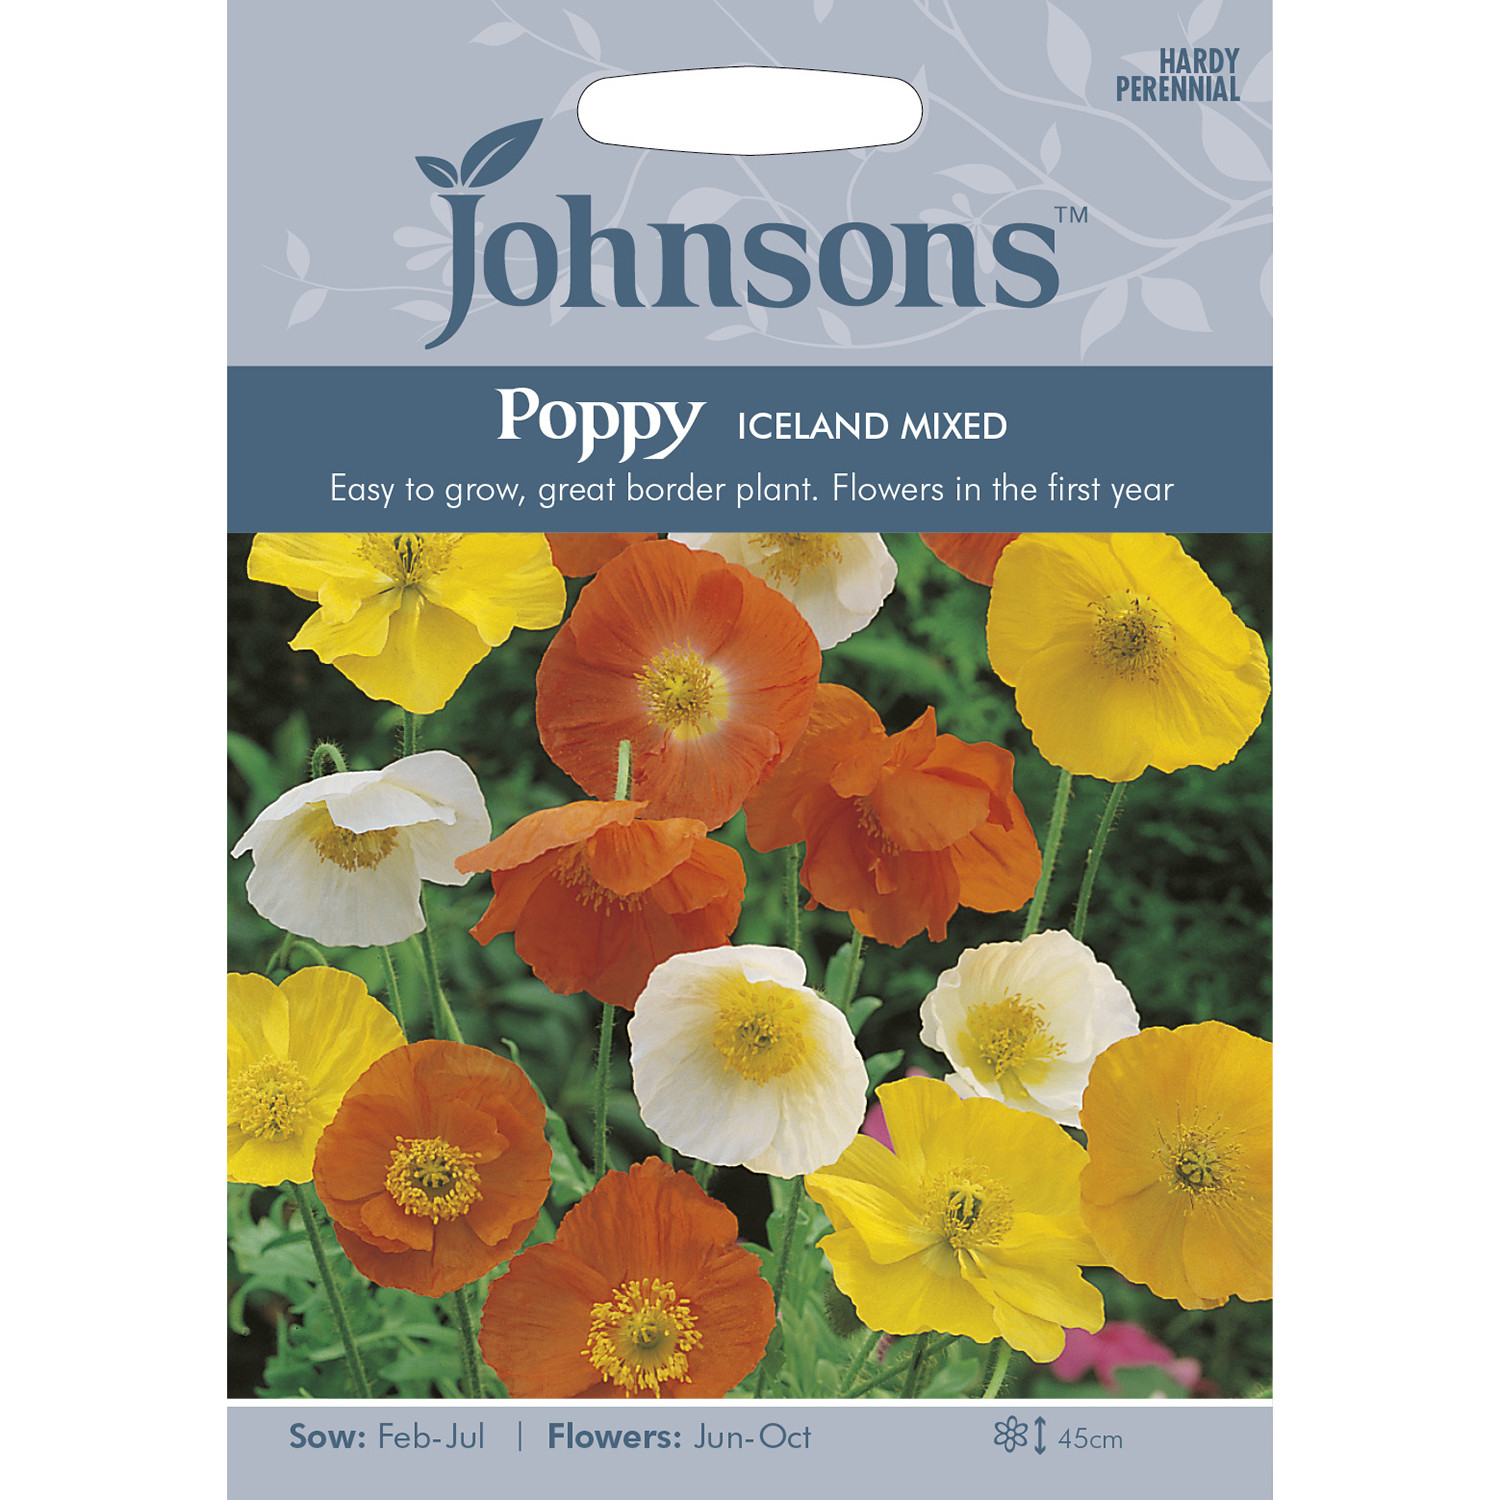 Johnsons Poppy Iceland Mixed Flower Seeds Image 2